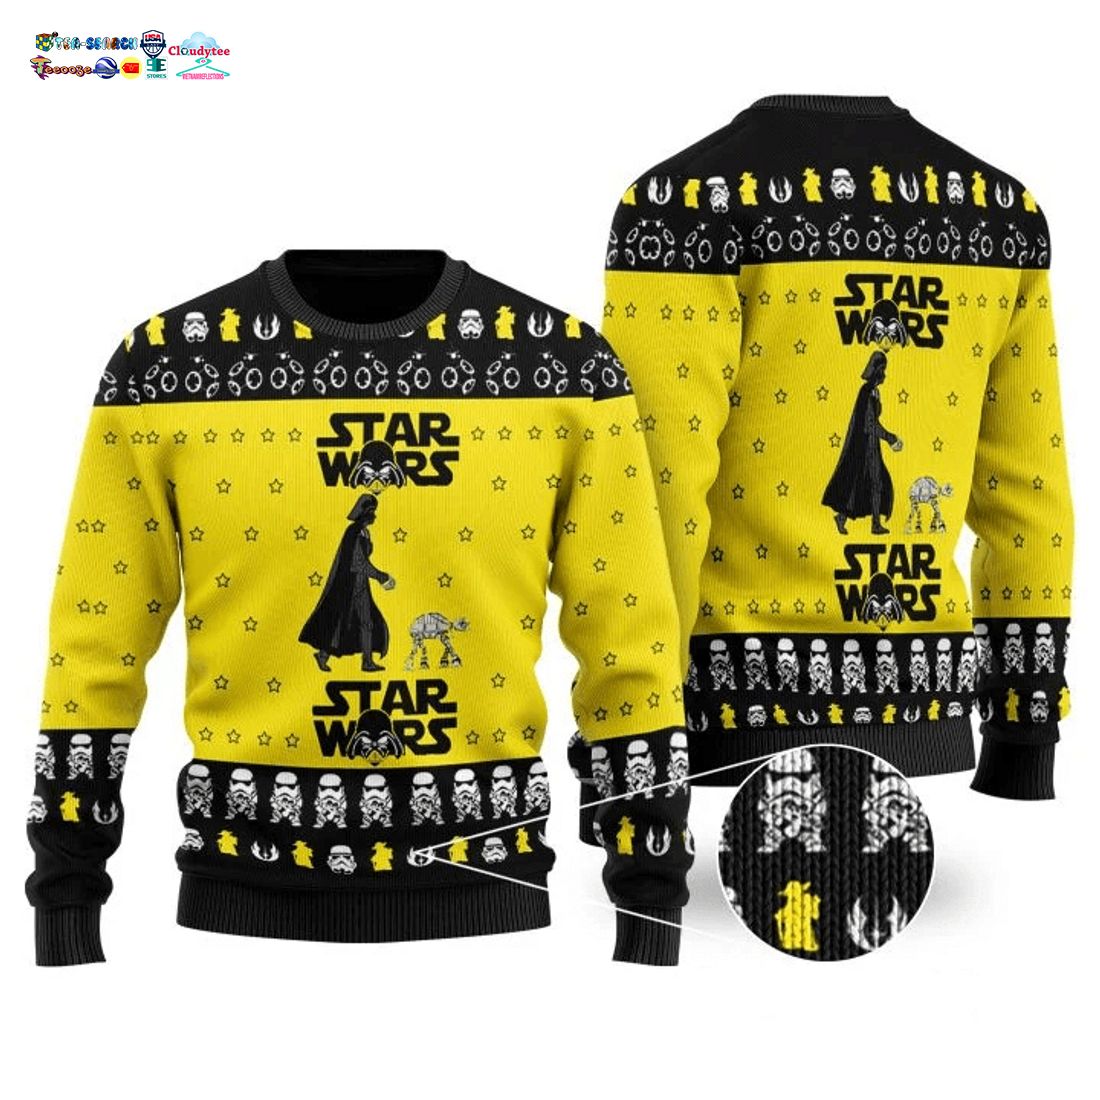 Darth Vader Star Wars Ugly Christmas Sweater